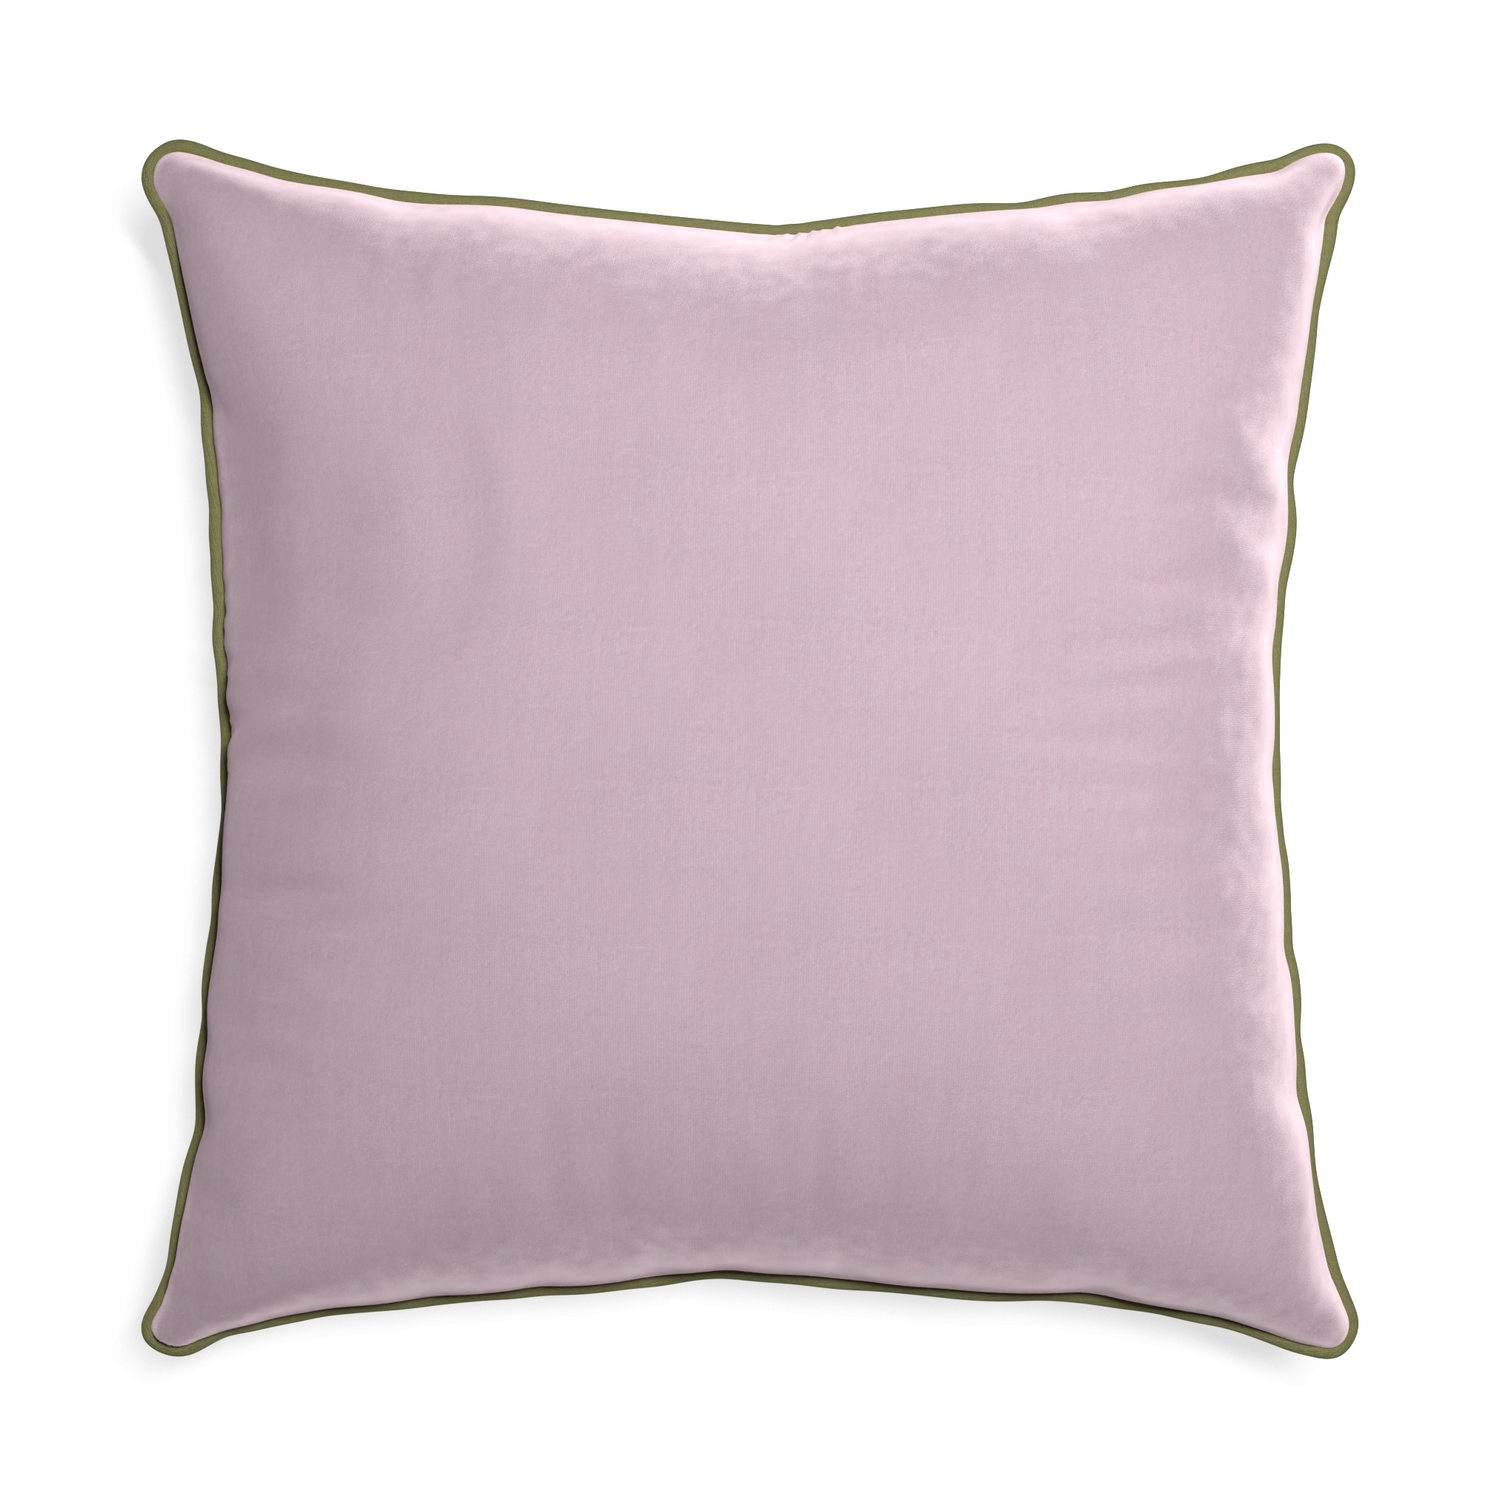 Euro-sham lilac velvet custom pillow with moss piping on white background